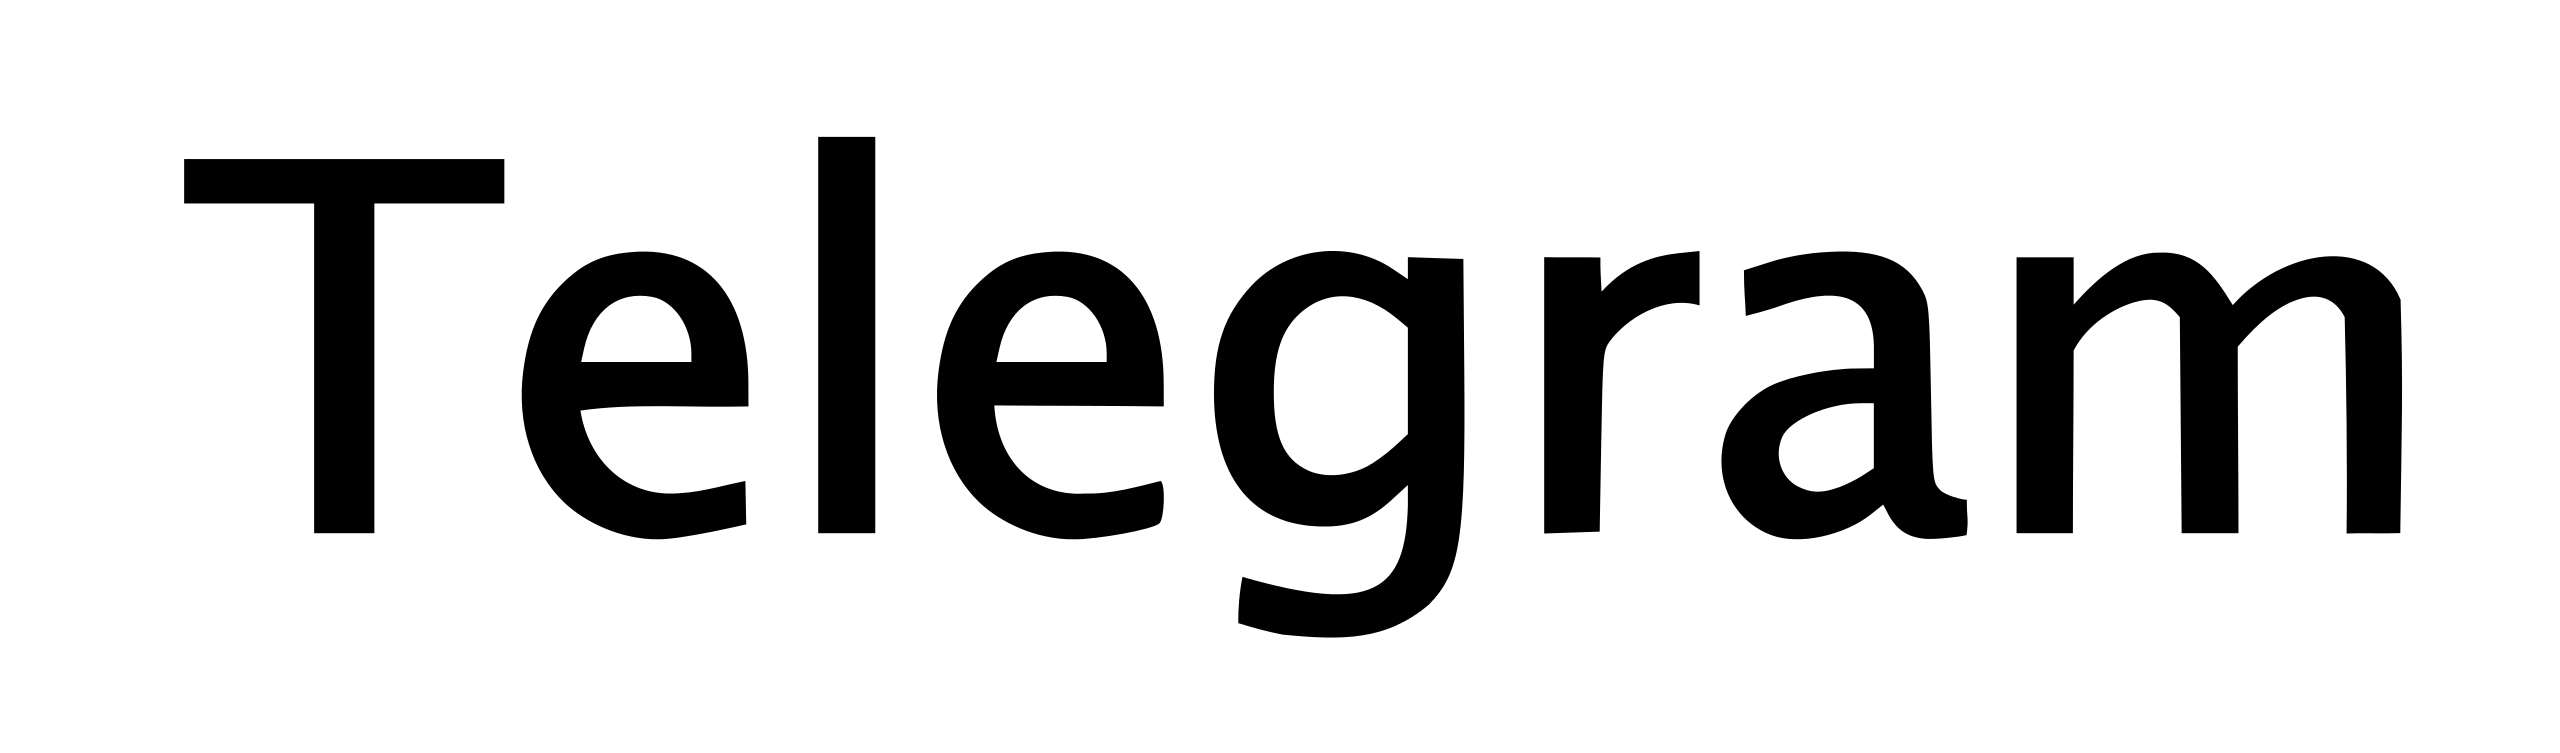 Шрифты тг канал. Телеграмм надпись. Эмблема телеграм. Телеграм логотип с надписью. Телеграм логотип на черном фоне.